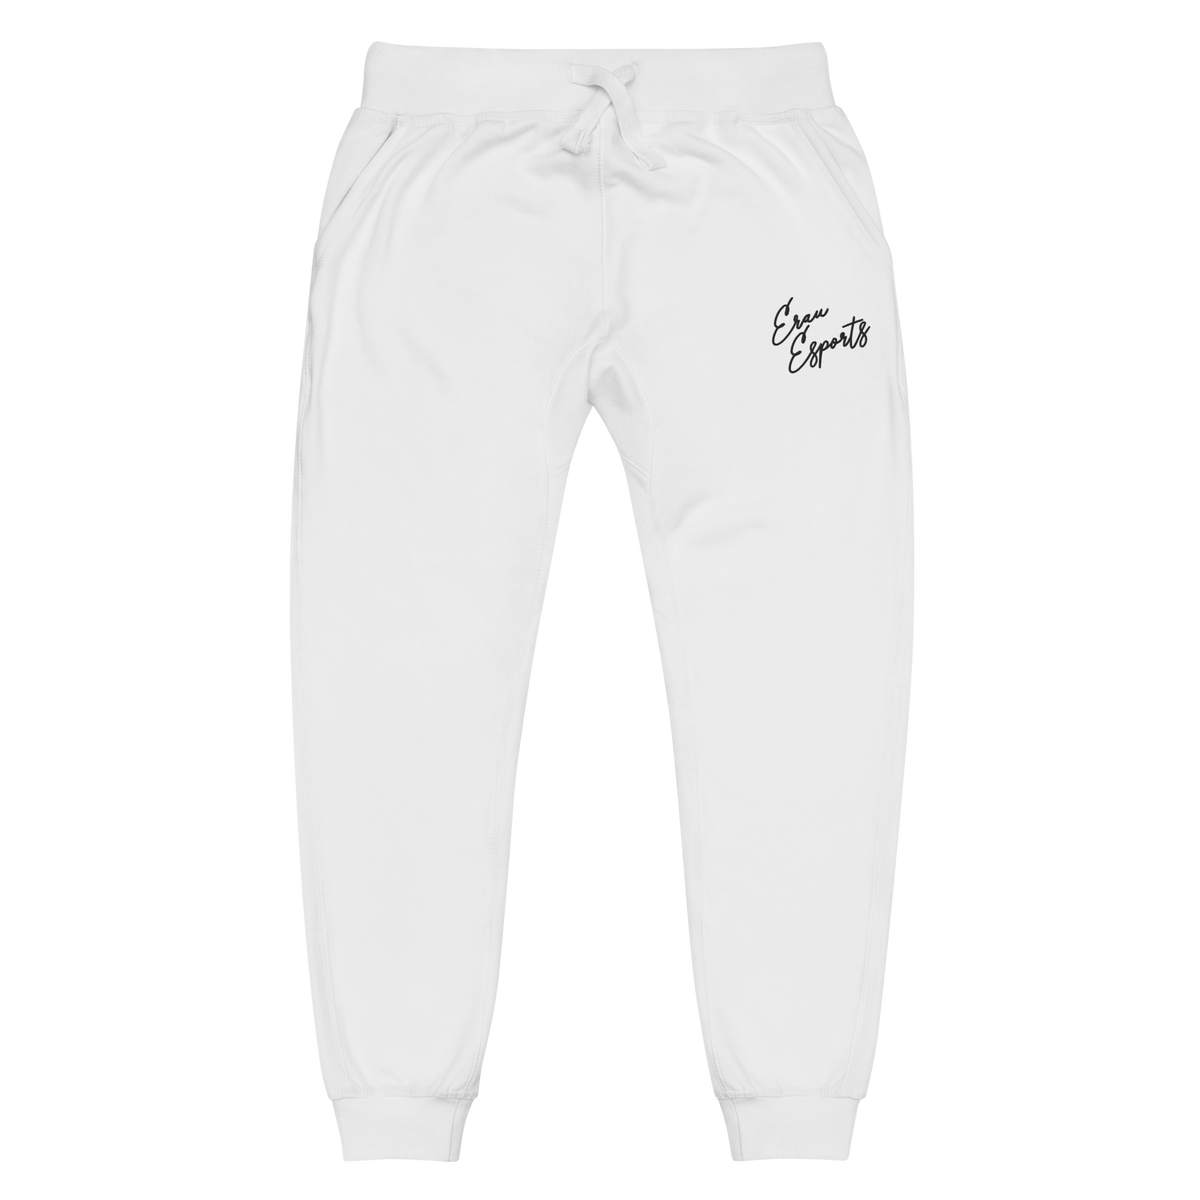 ERAU Esports | On Demand | Embroidered White Unisex fleece sweatpants